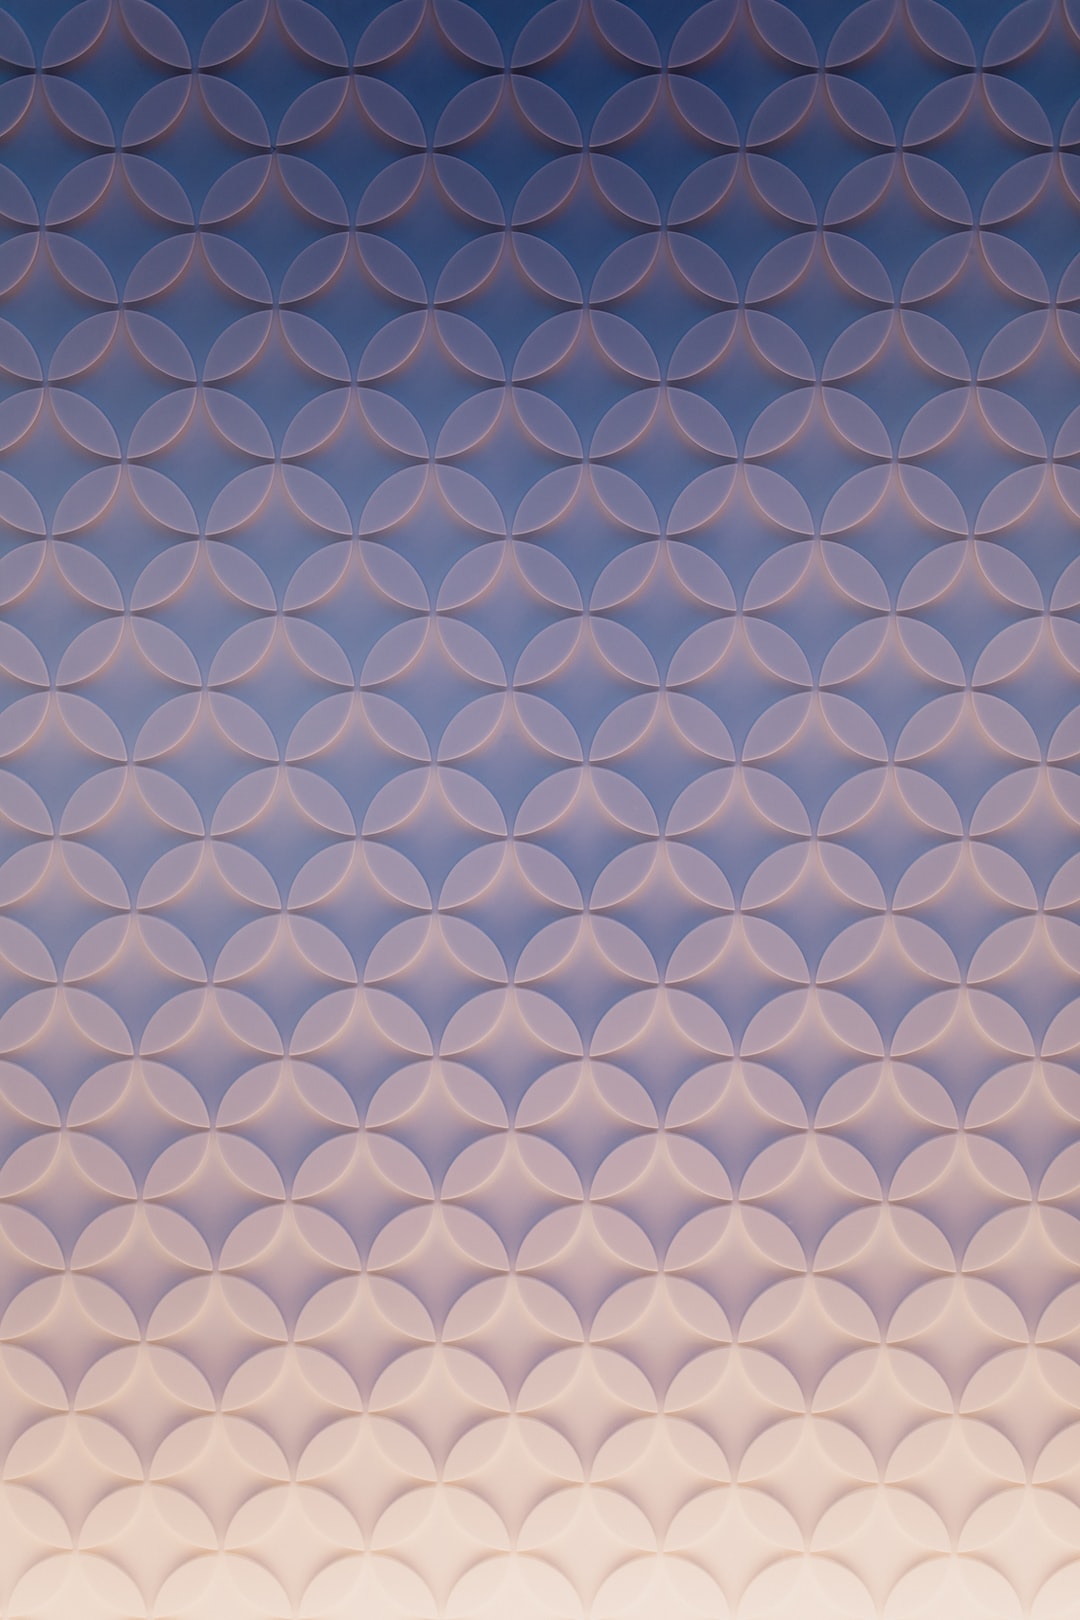 Artistic 4K Pattern Wallpapers